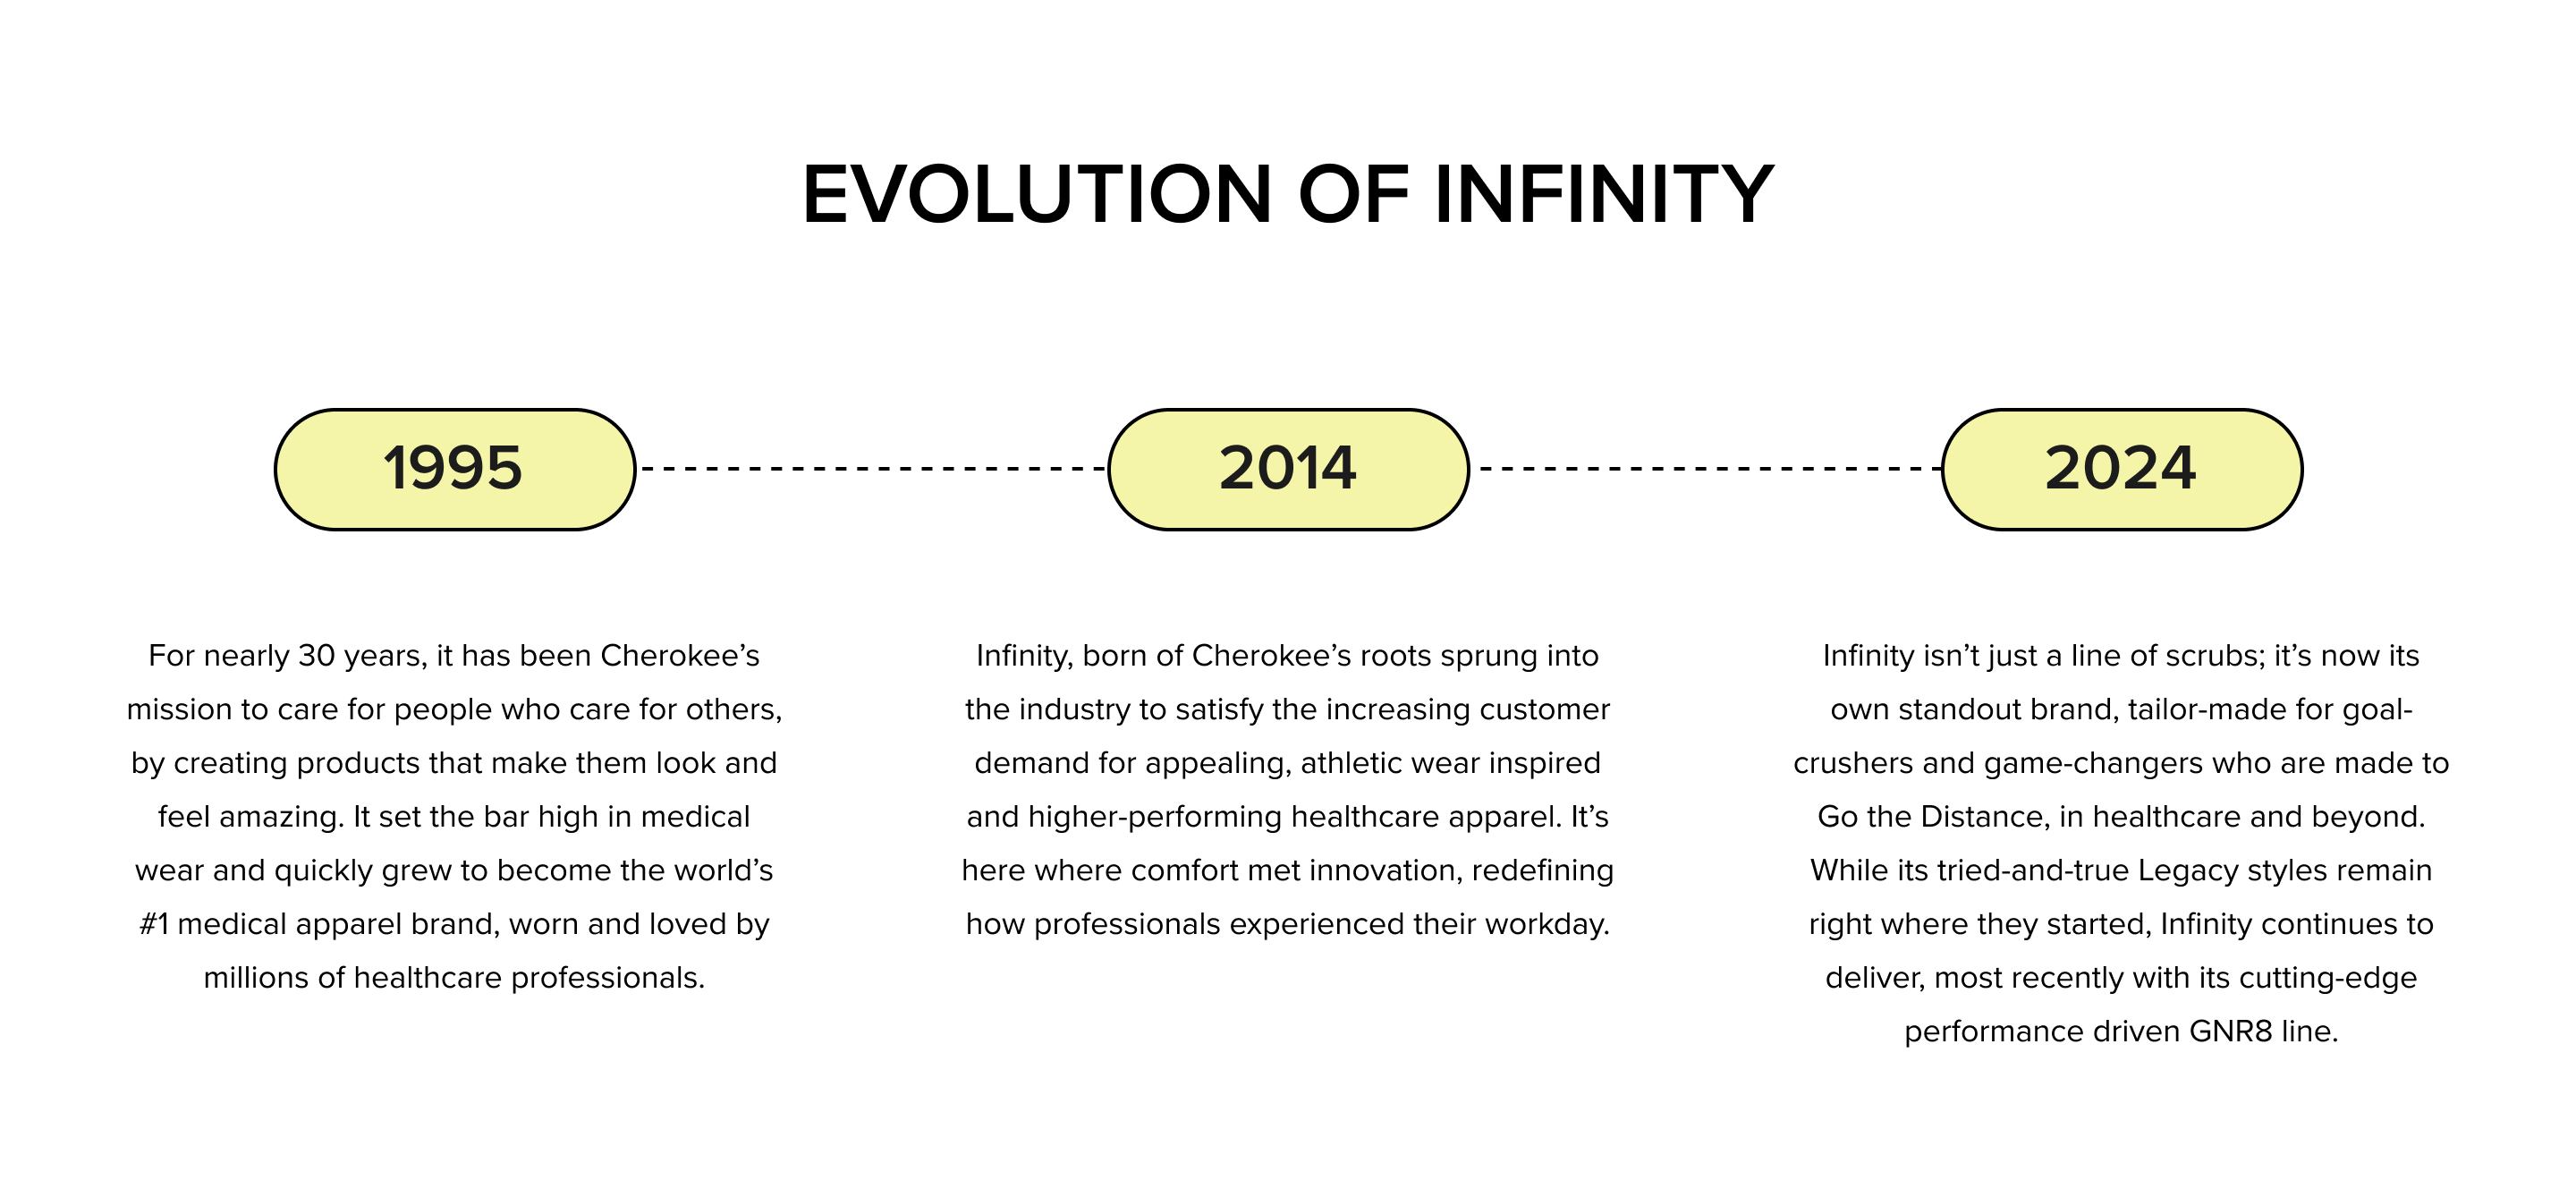 Evolution of Infinity